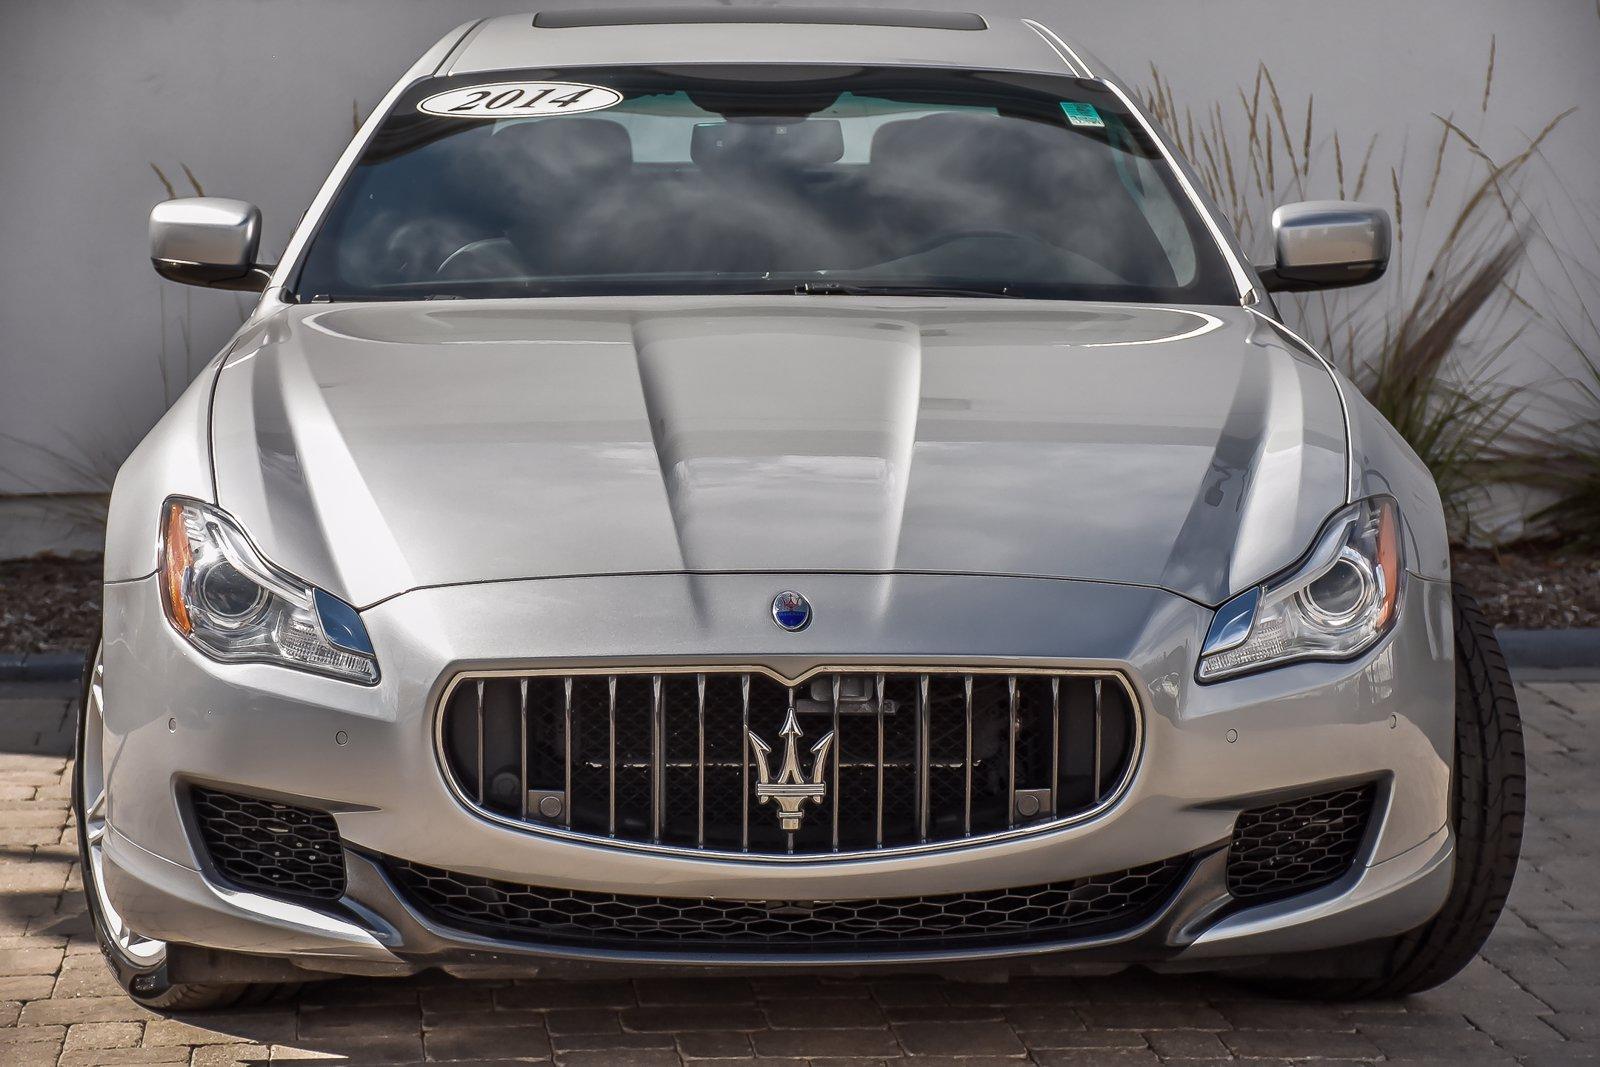 Used 2014 Maserati Quattroporte S Q4 Luxury/Sport Pkg | Downers Grove, IL